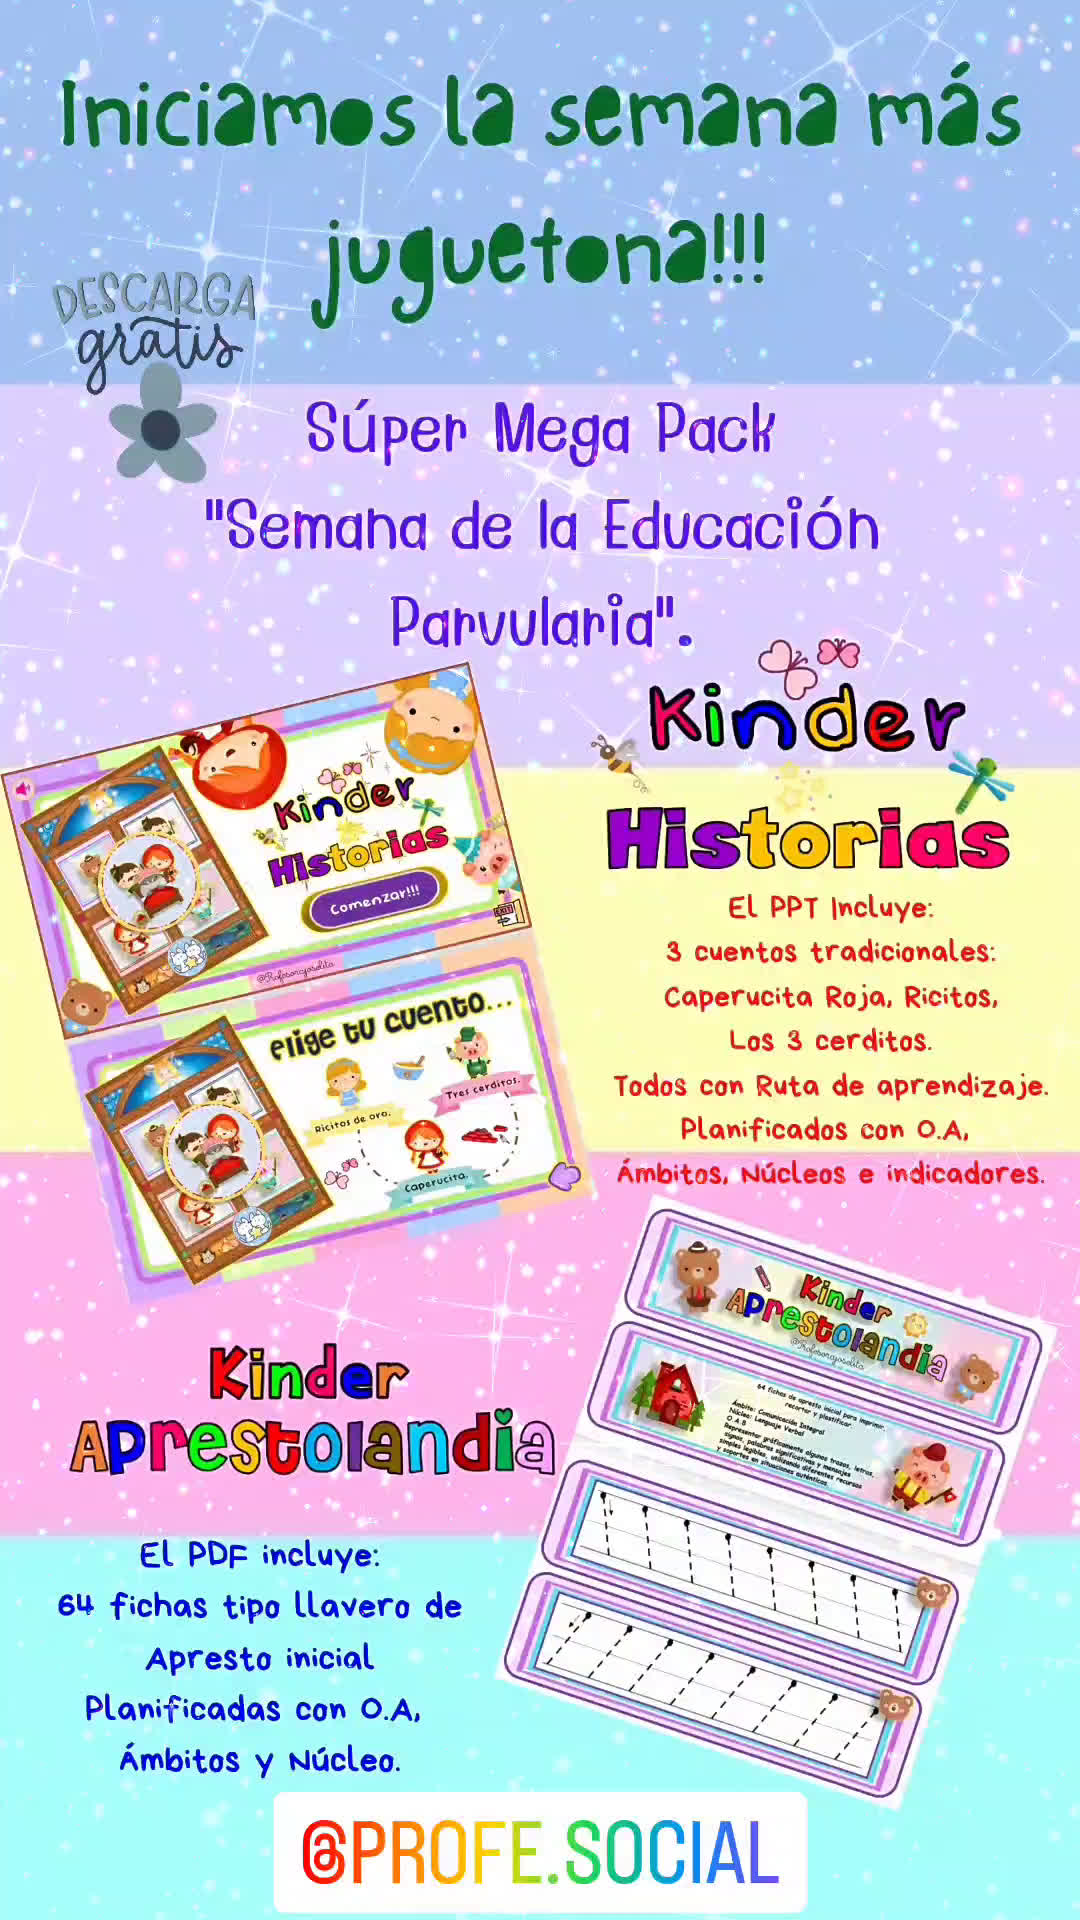 Super Mega Pack "Semana de la Educación Parvularia".